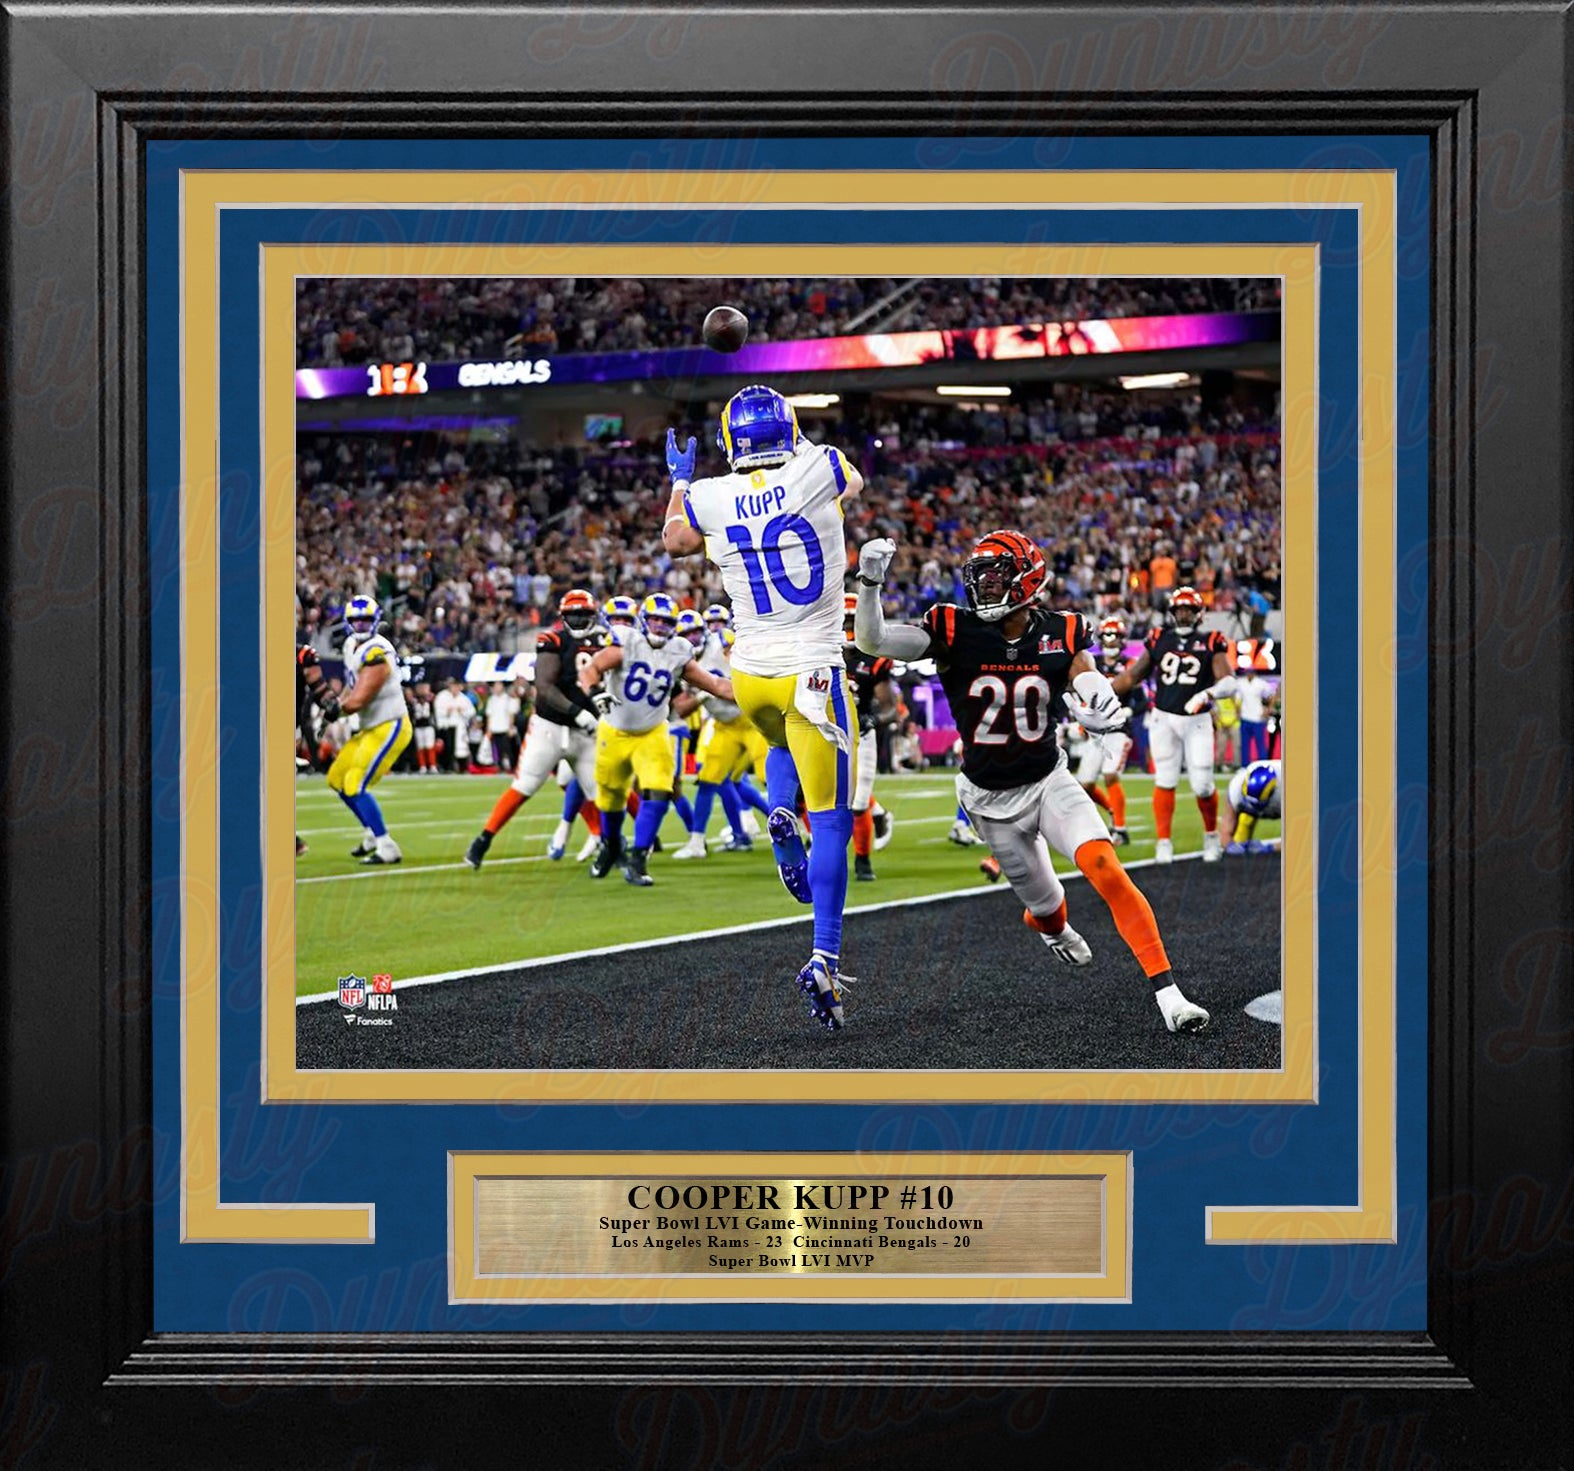 Cooper Kupp Super Bowl LVI Game-Winning Touchdown Los Angeles Rams 8" x 10" Framed Football Photo - Dynasty Sports & Framing 